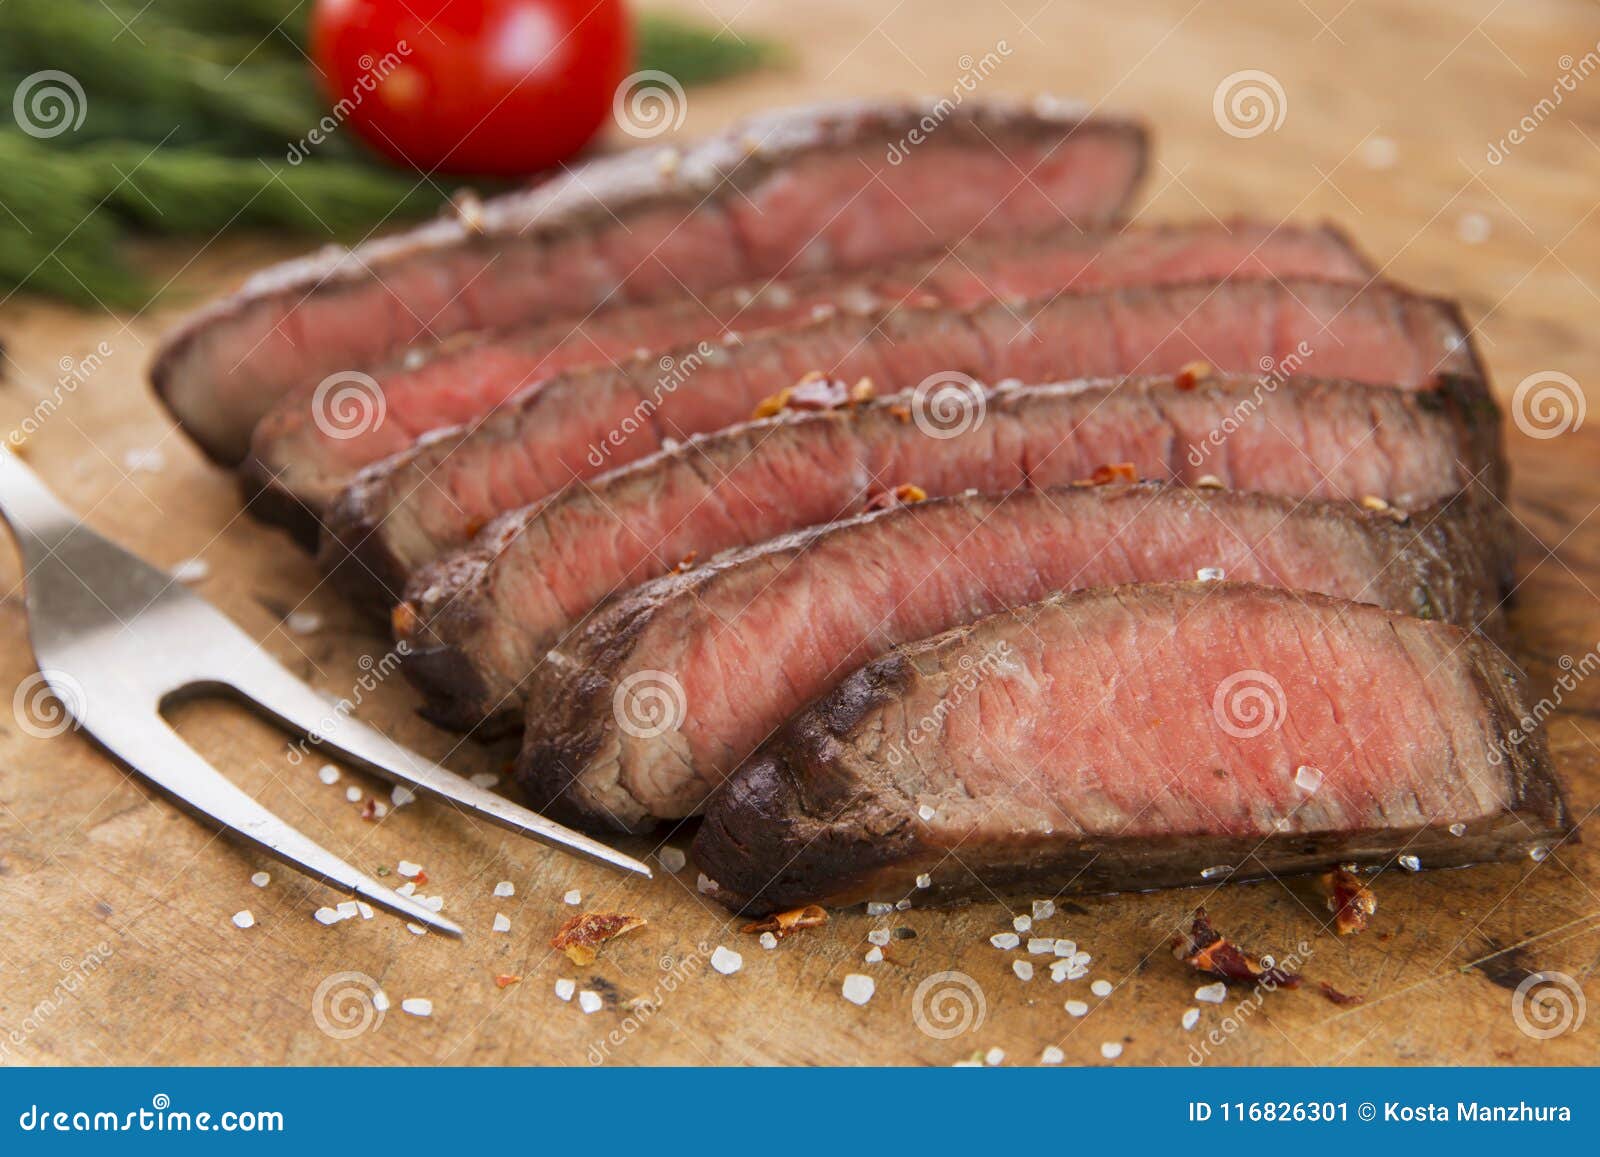 cooked beef steak sliced medium rare close-up